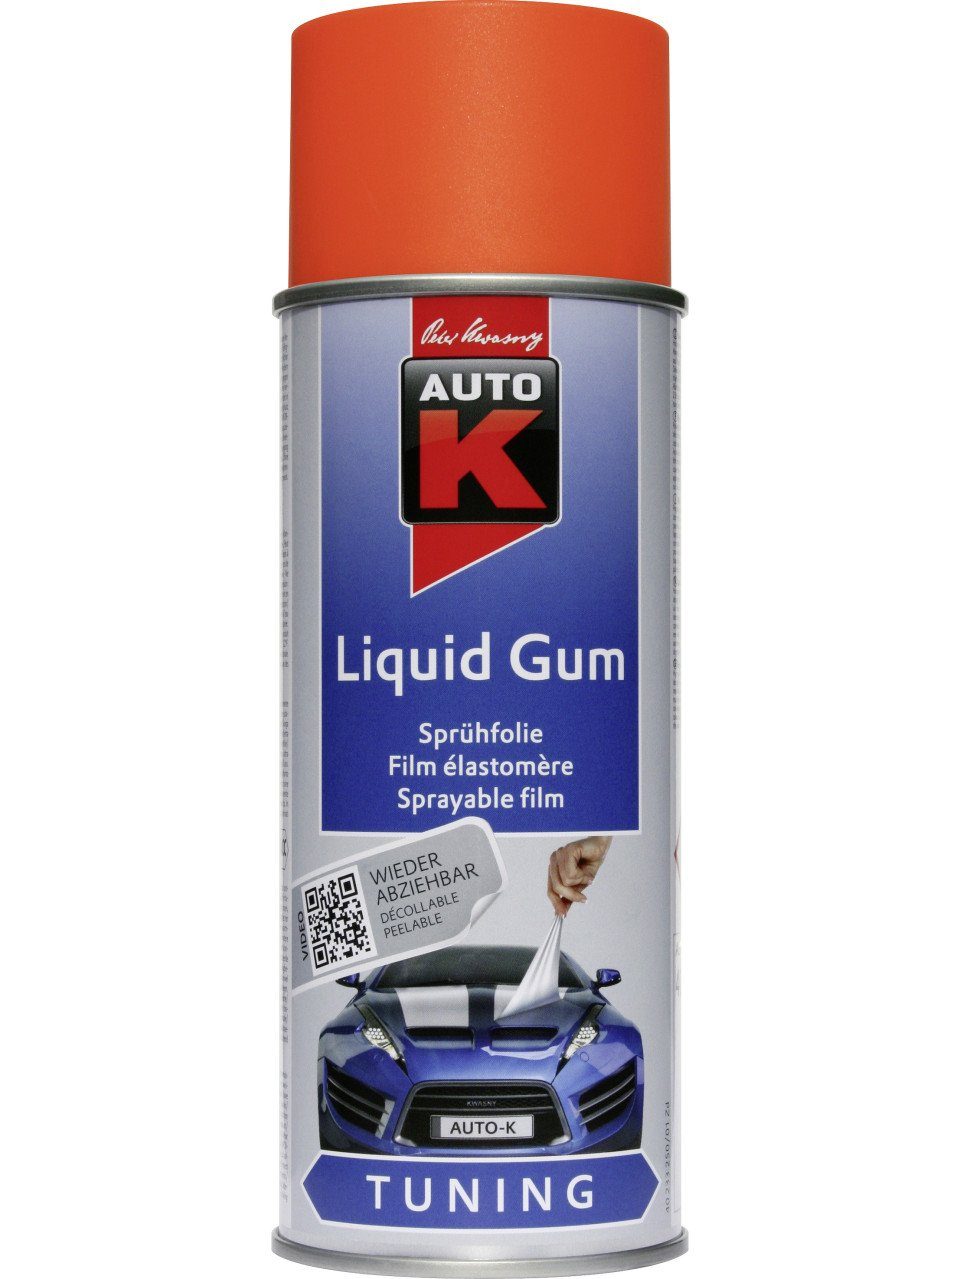 Auto-K Sprühfarbe Tuning neonorange Gum Liquid Sprühfolie Auto-K